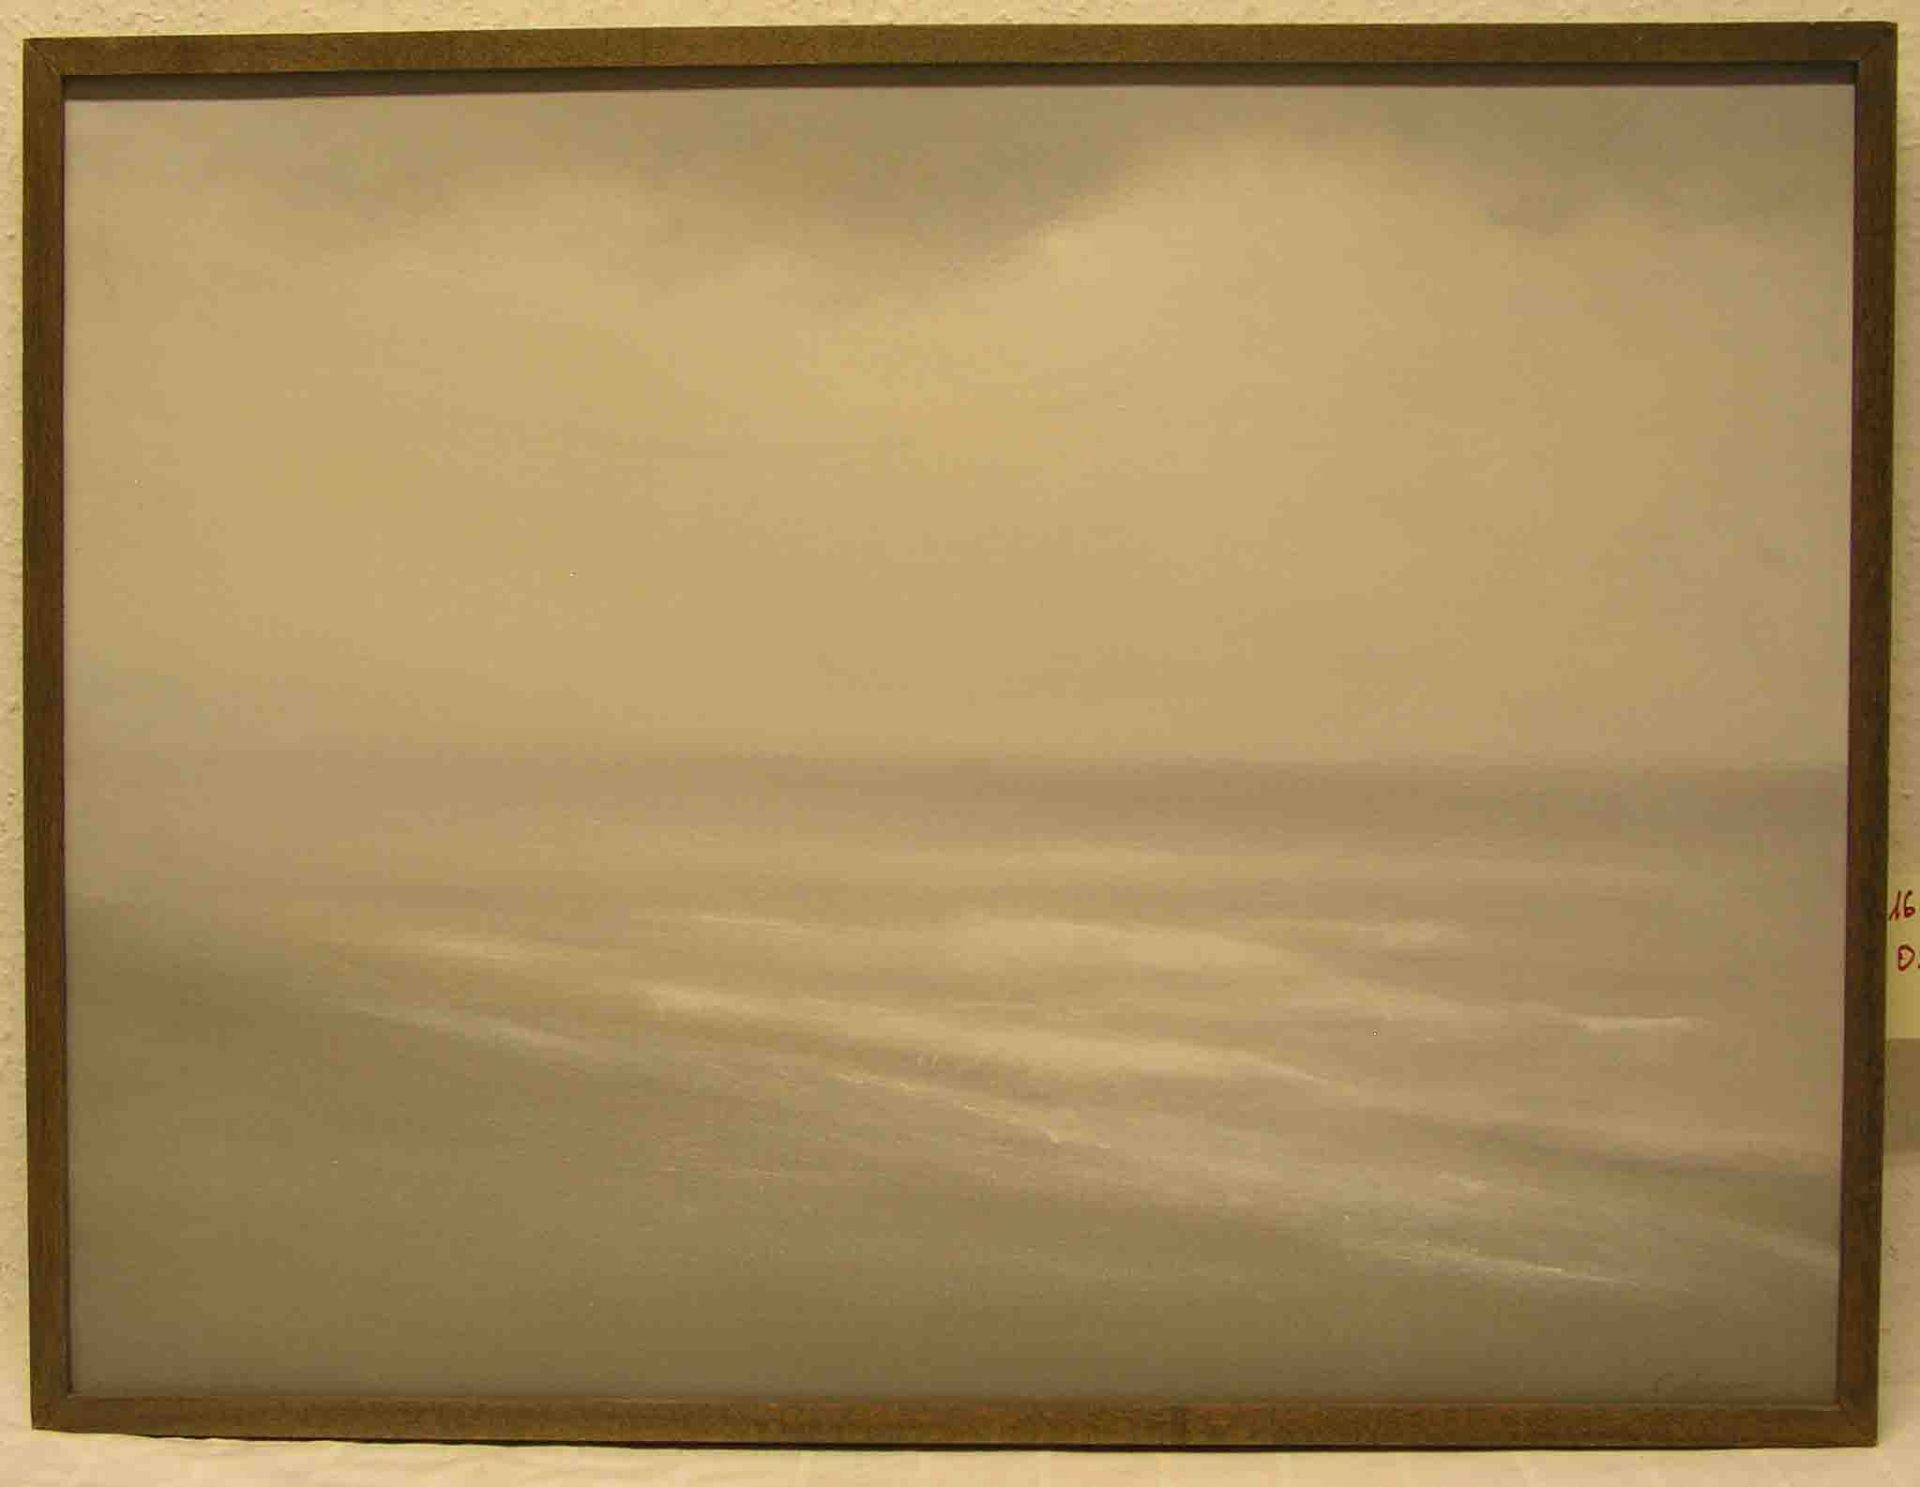 Sevens, Konrad: "Landschaft". Öl/Lwd., signiert, ca. 1983. 58 x 78cm. Rahmen.